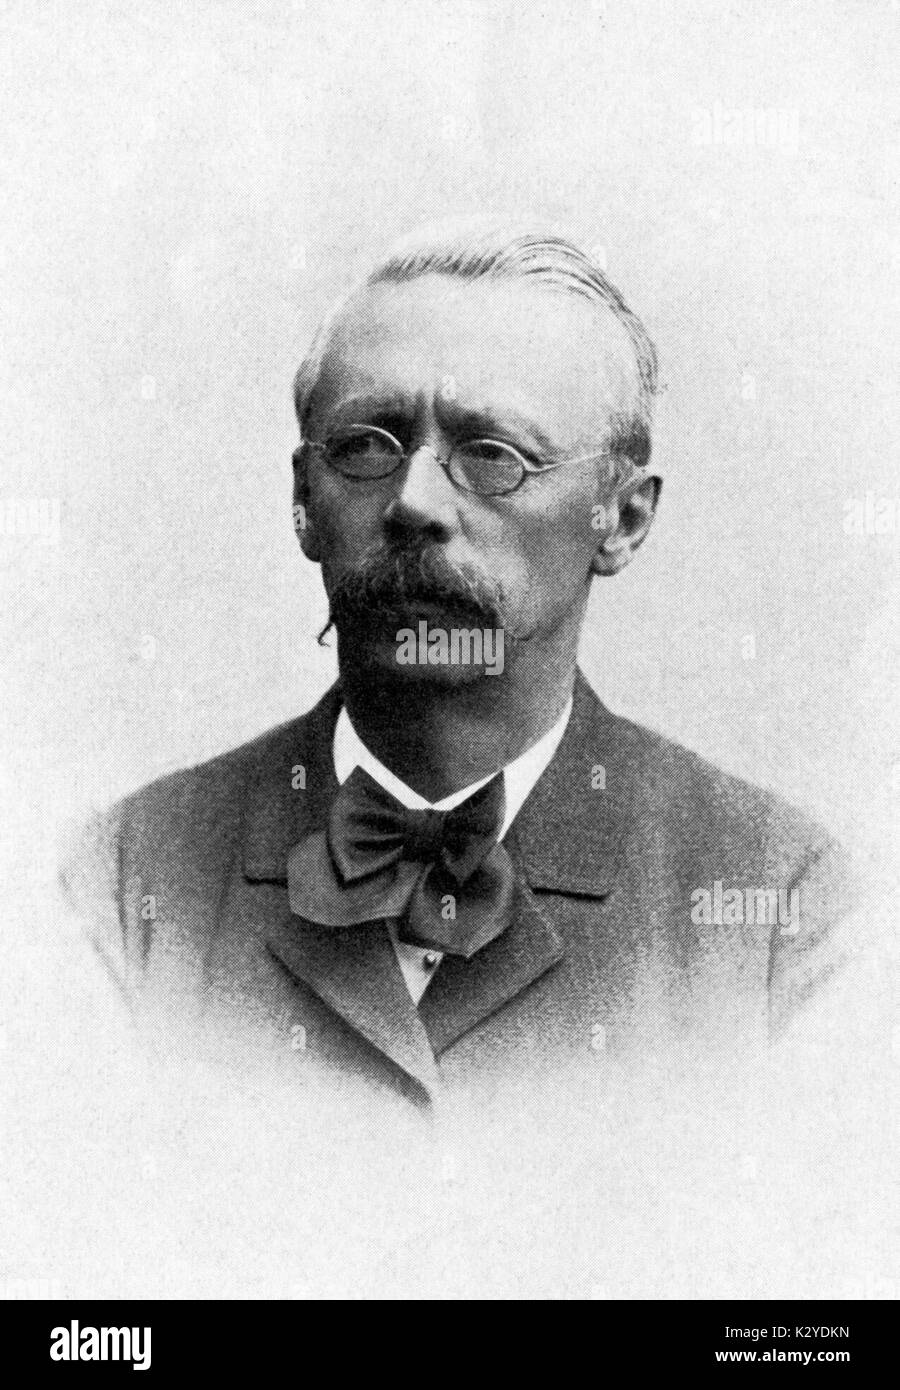 Richard Faltin - portrait of the Finnish composer, organist, and music pedagogue. RF: 5 January 1835 - 1 June 1918. Stock Photo